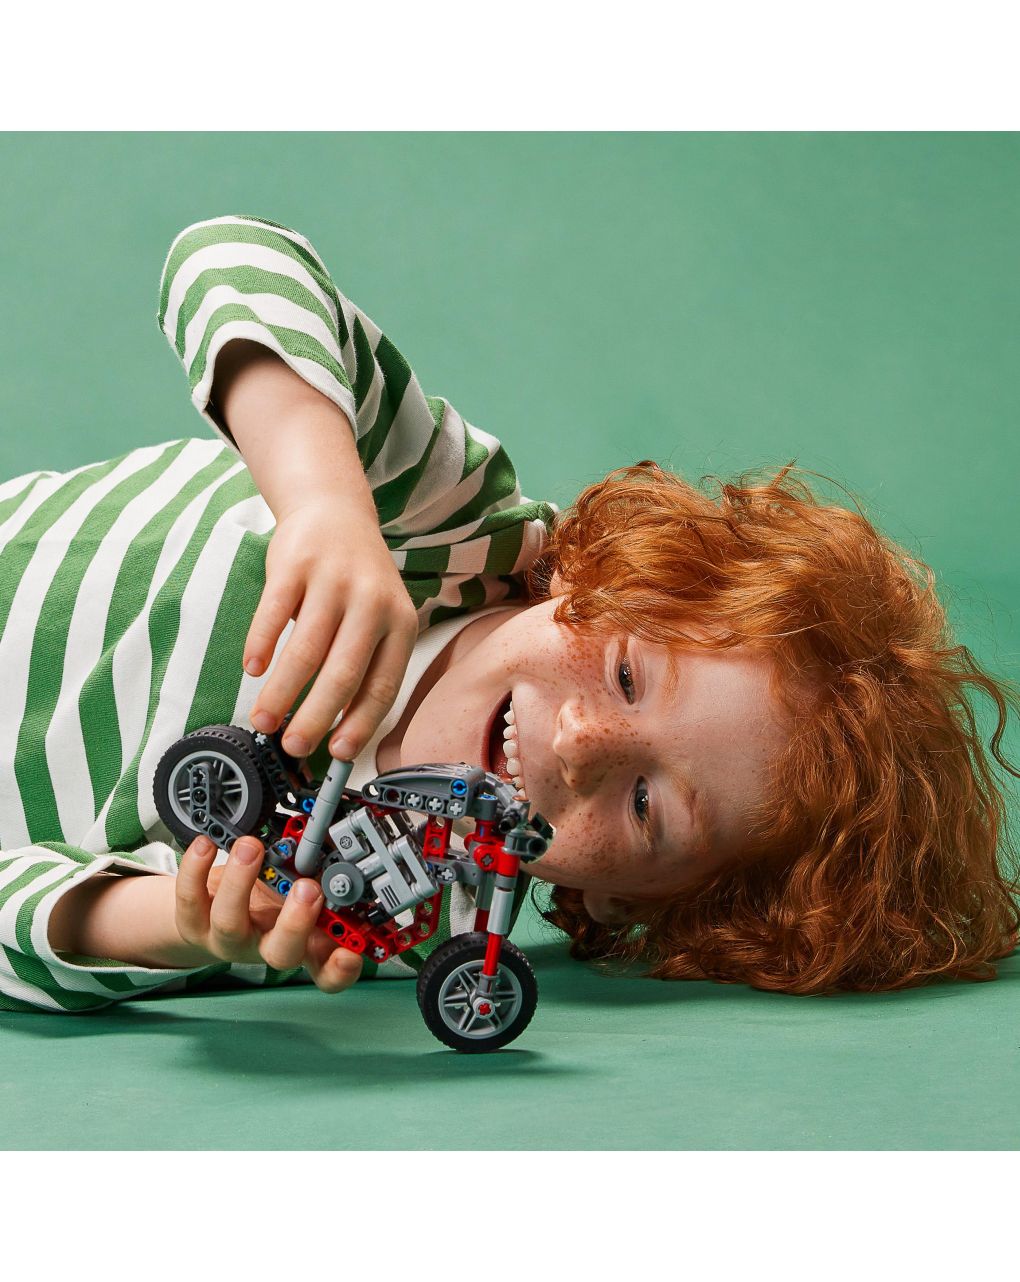 Lego technic - motocicleta - 42132 - LEGO